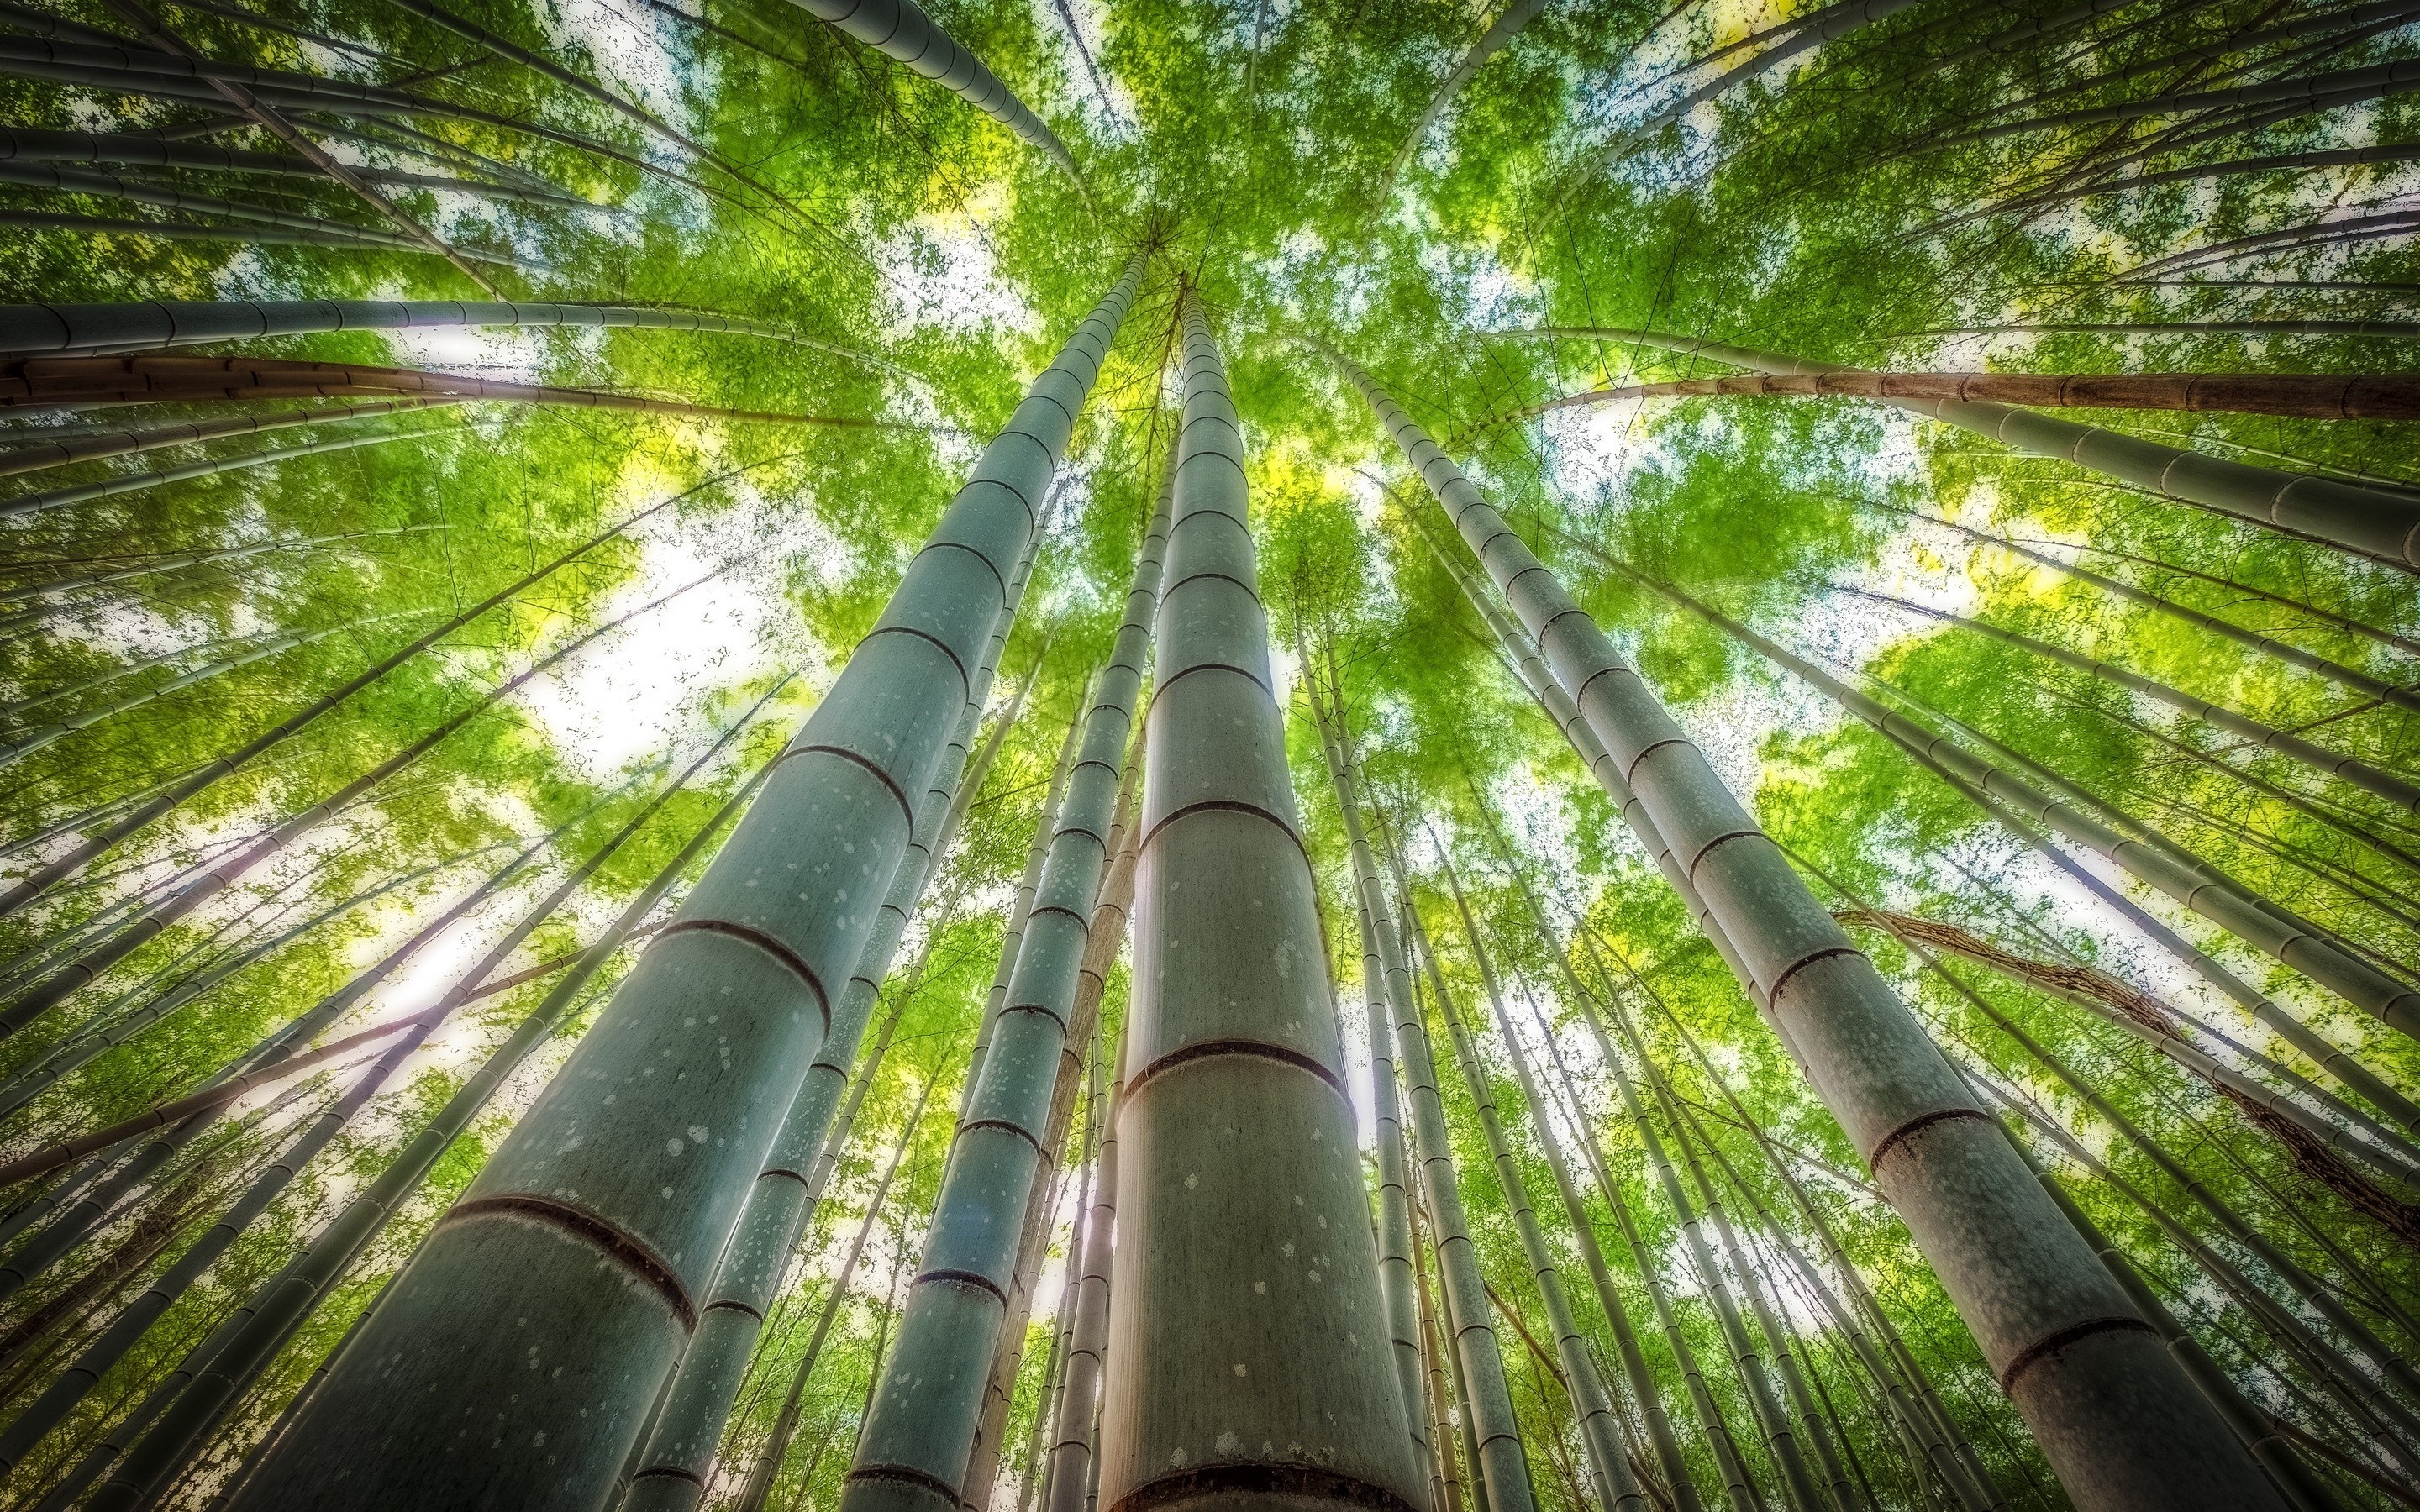 Bamboo forest wallpaper, Nature's tranquility, Serene landscape, Peaceful escape, 2880x1800 HD Desktop